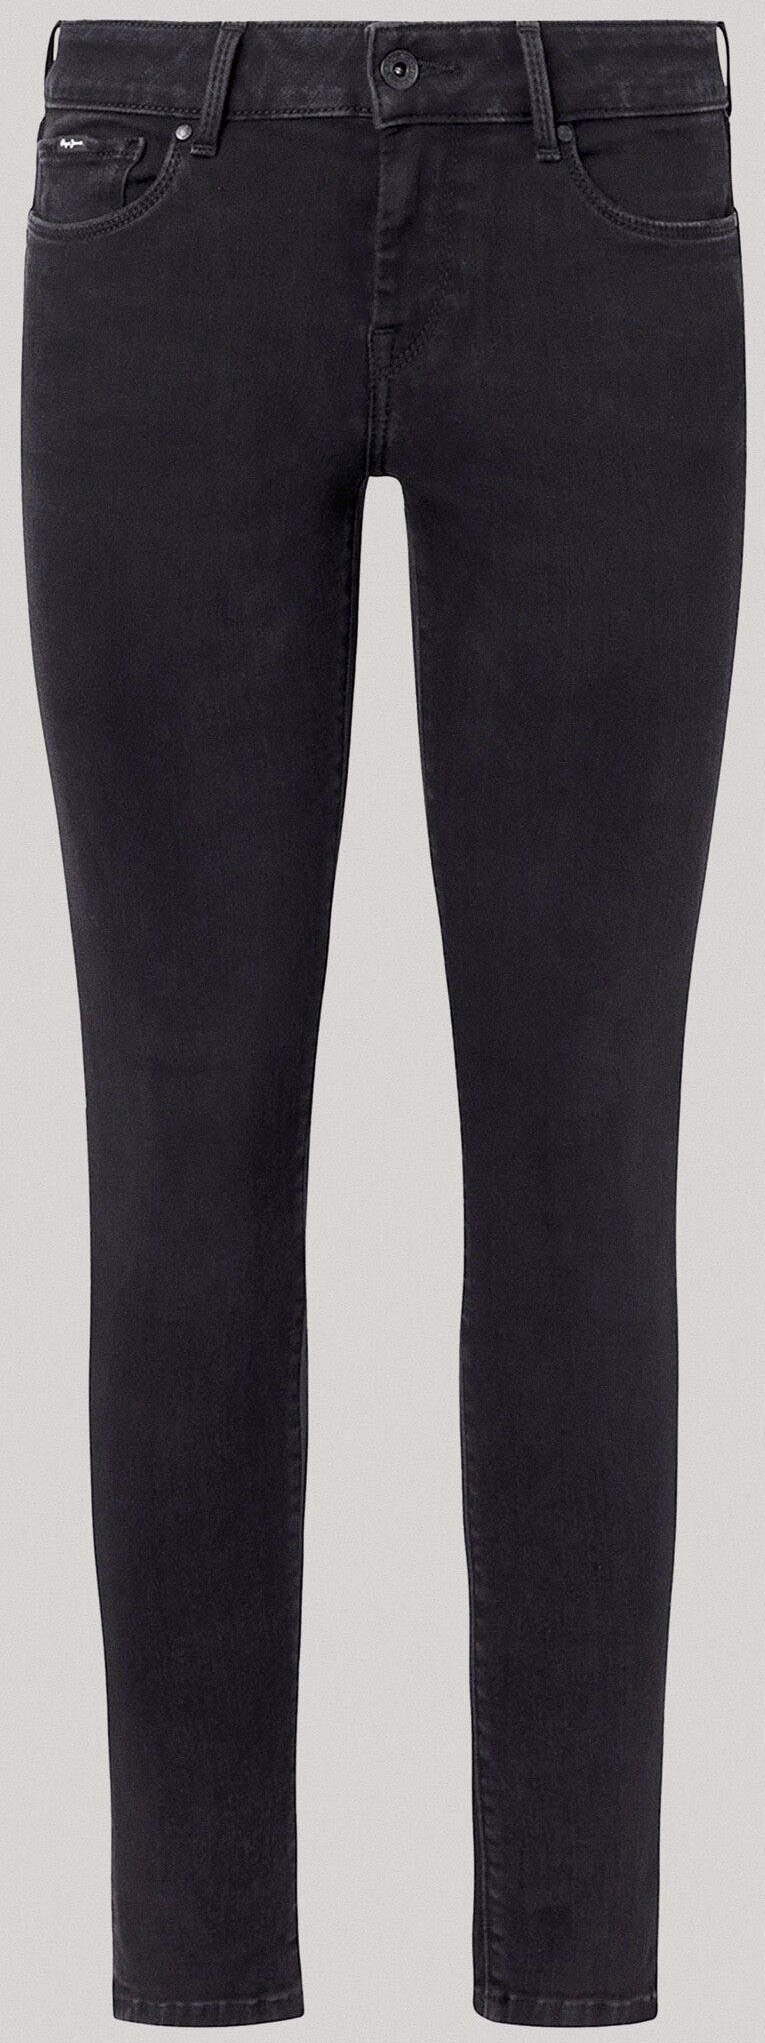 Bund Jeans Skinny-fit-Jeans 1-Knopf Stretch-Anteil 5-Pocket-Stil black und mit SOHO Pepe im